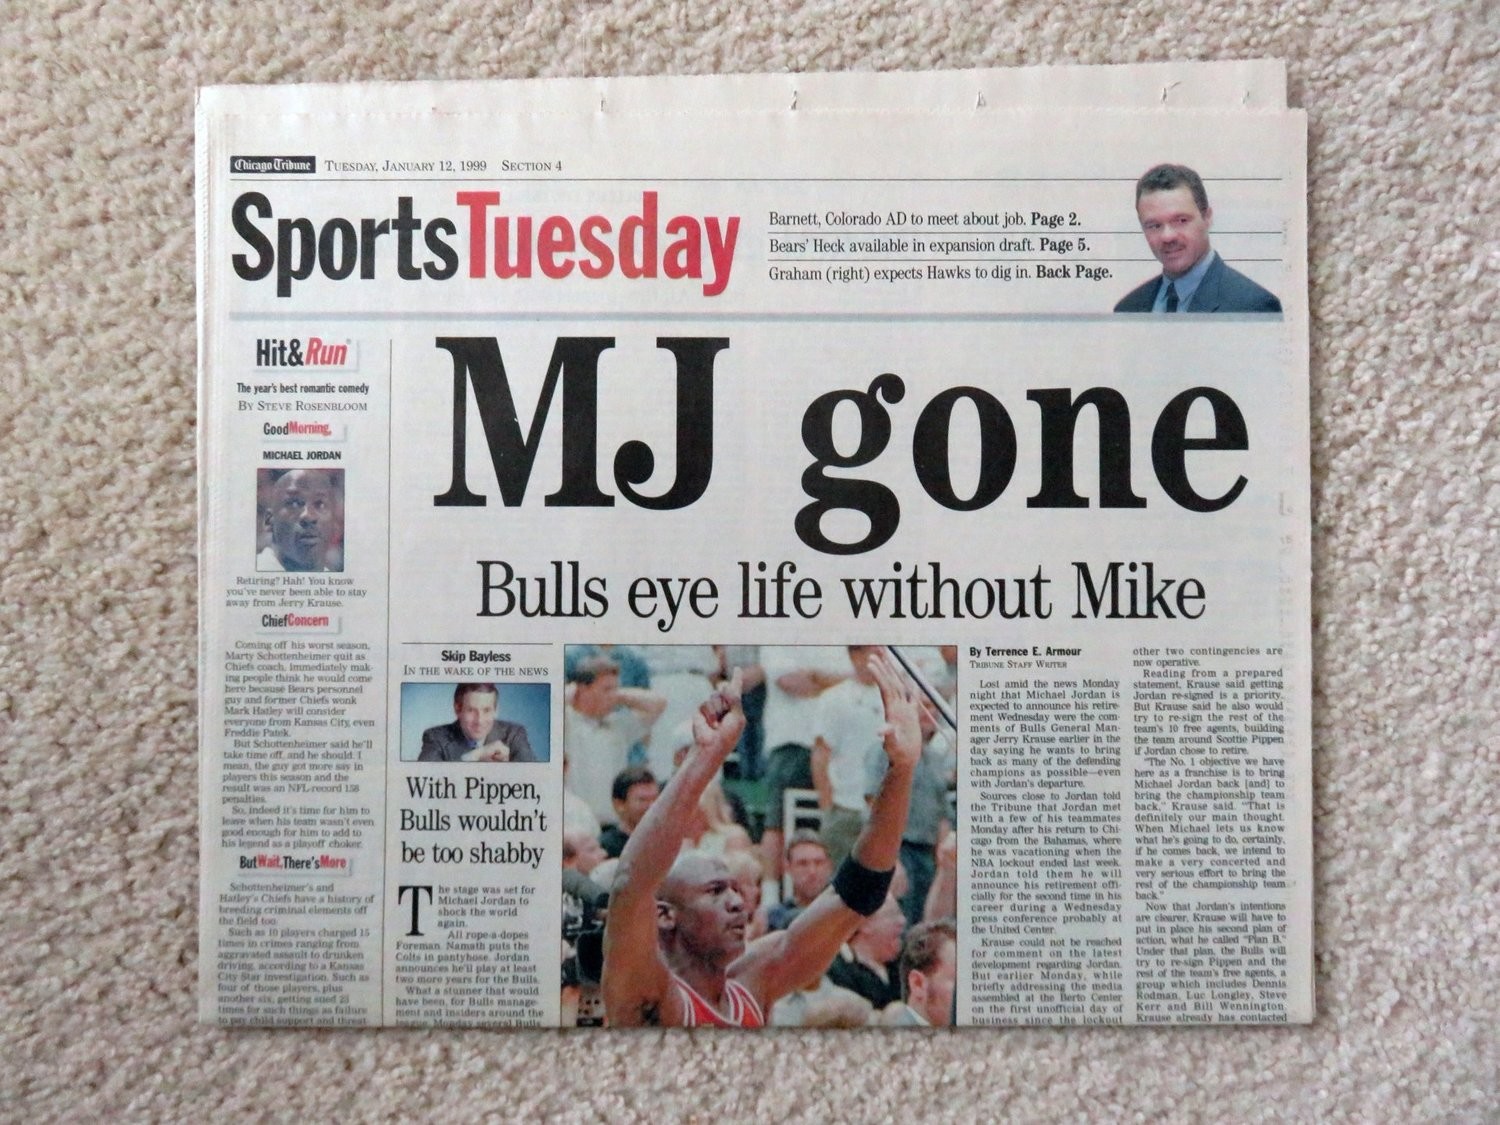 (Michael Jordan) Gone